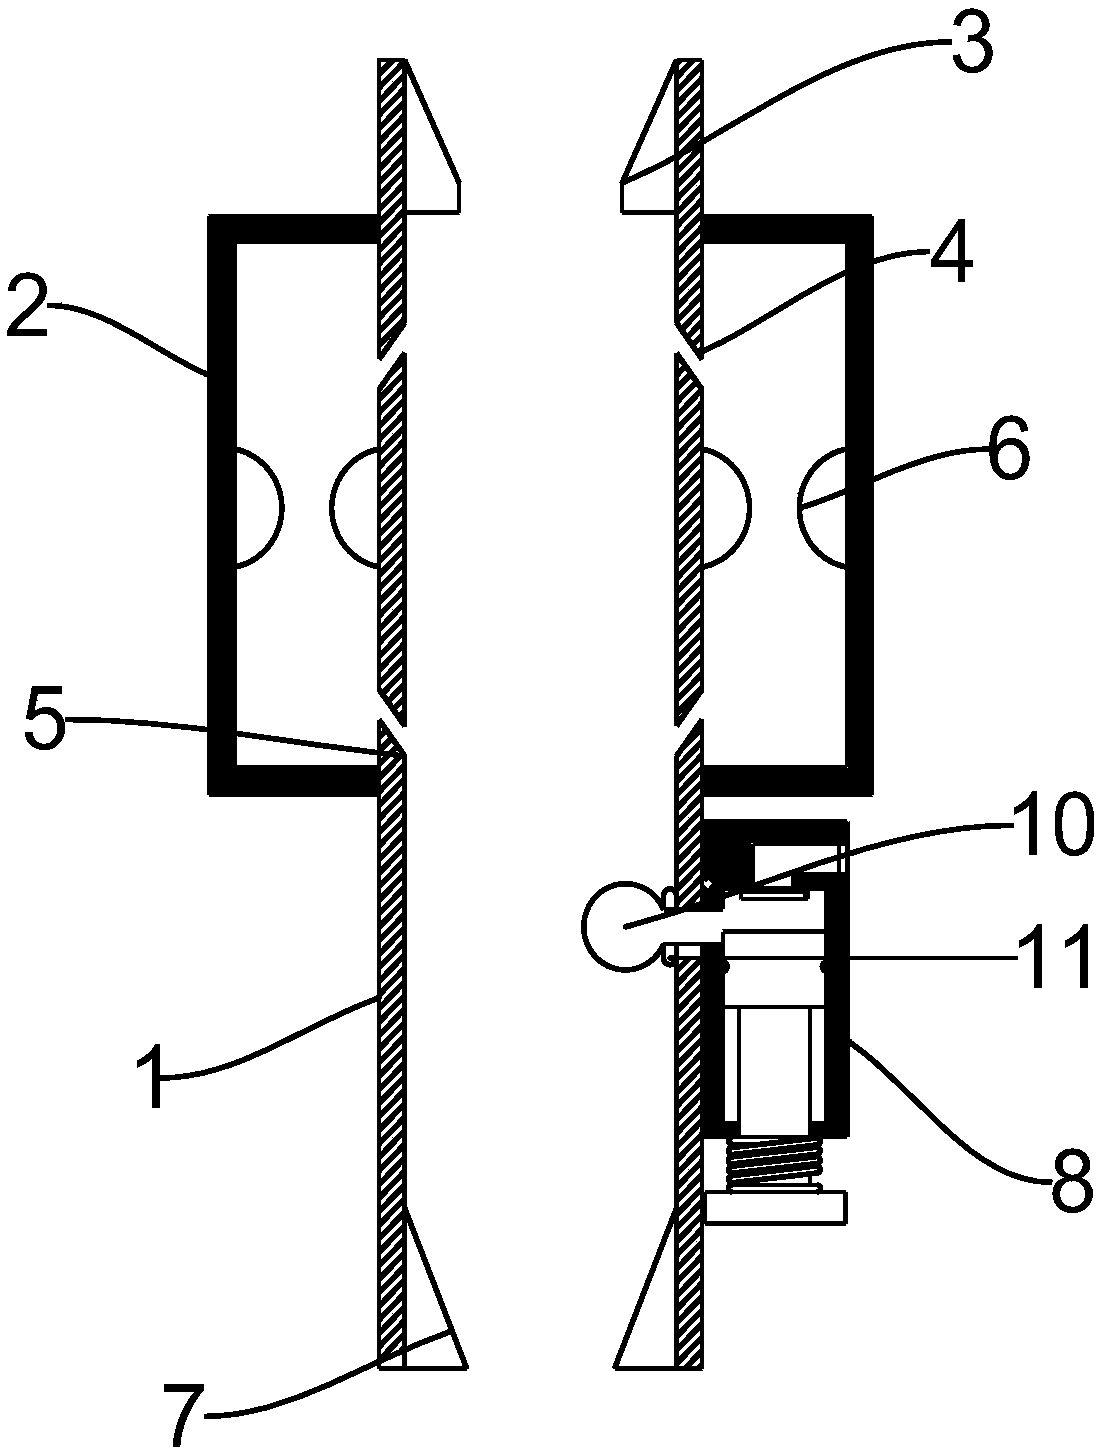 A pneumatic pressure regulating fluid booster device